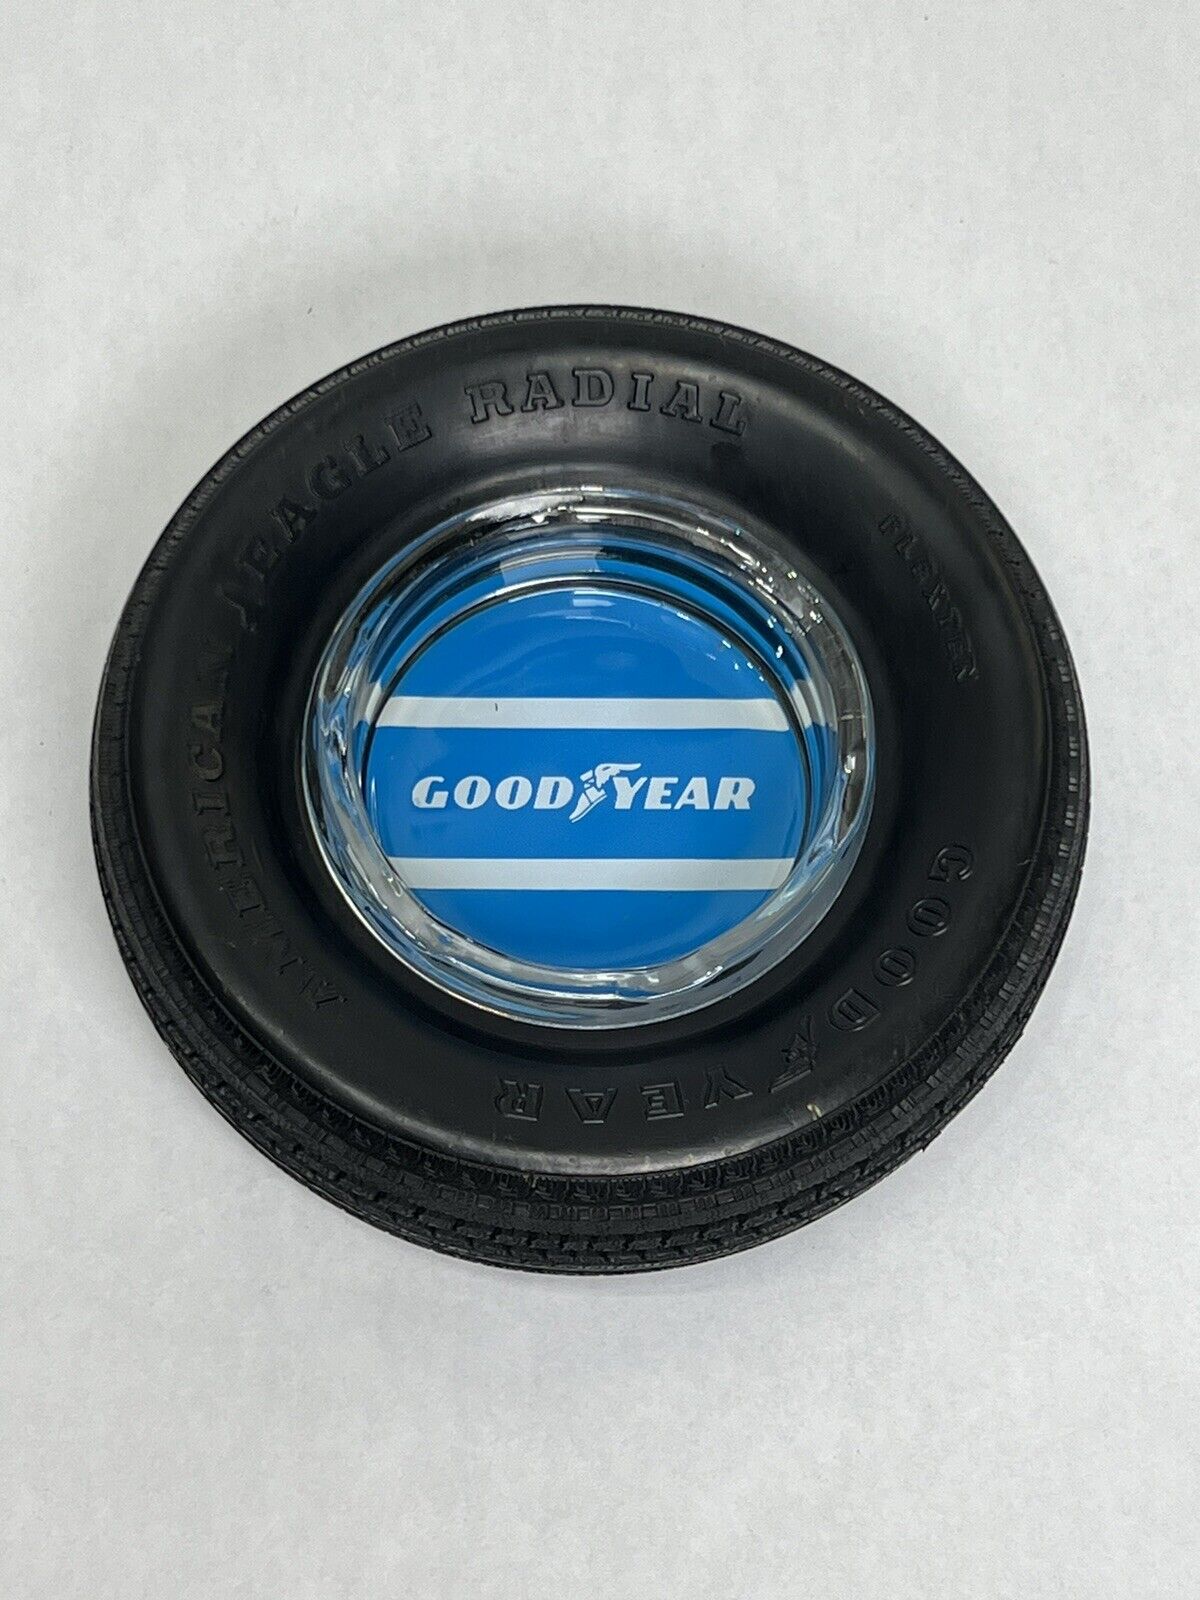 Vintage Goodyear G167 UNISTEEL Tire Advertising Ashtray